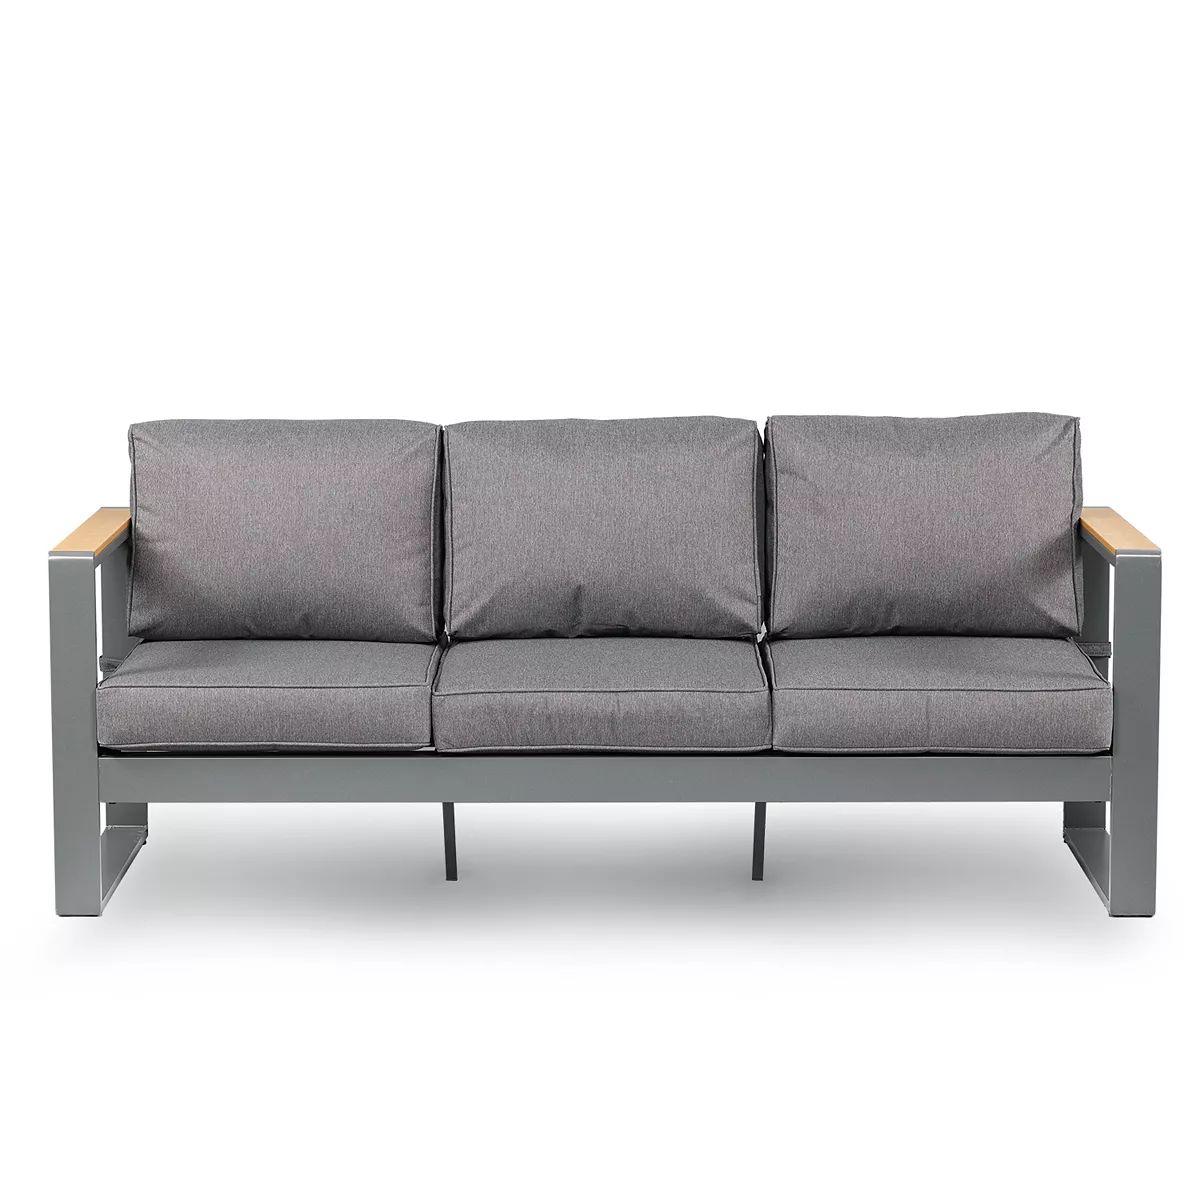 Aoodor Patio Furniture 3 Seater Aluminum Sofa Couch Deep Seat | Kohl's